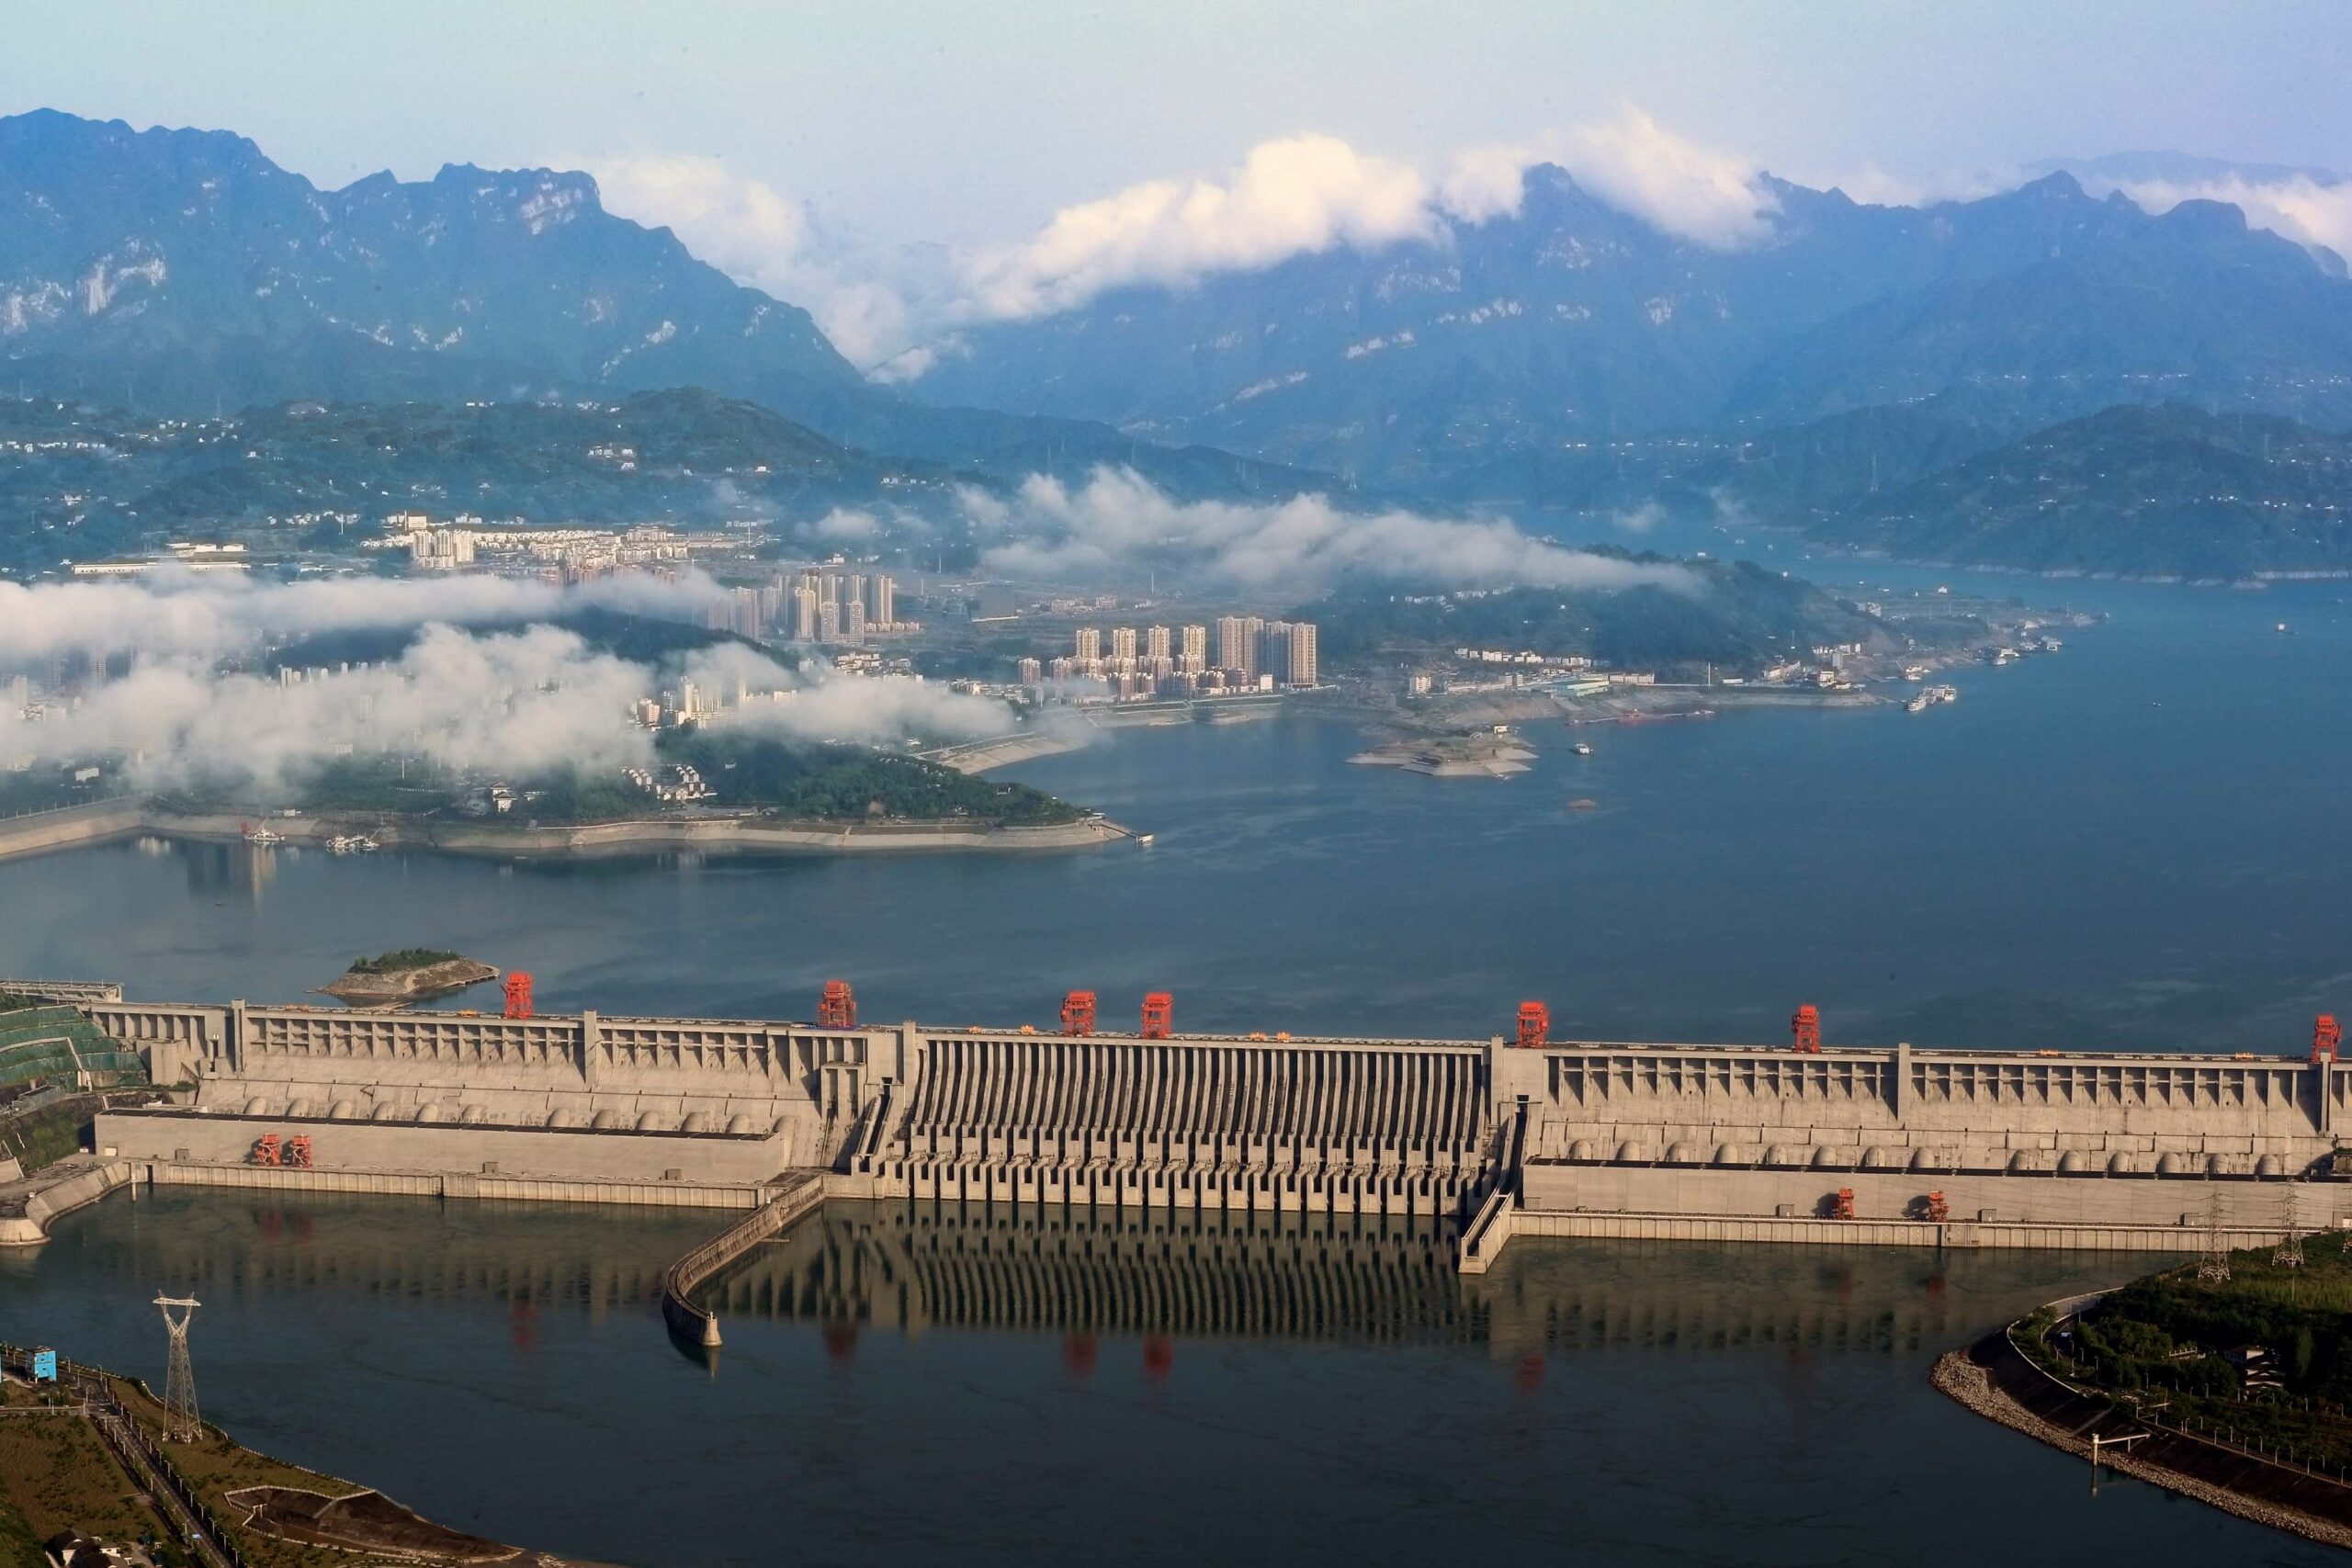 Inženjerska čuda utorkom: Hidroelektrana Tri klanca